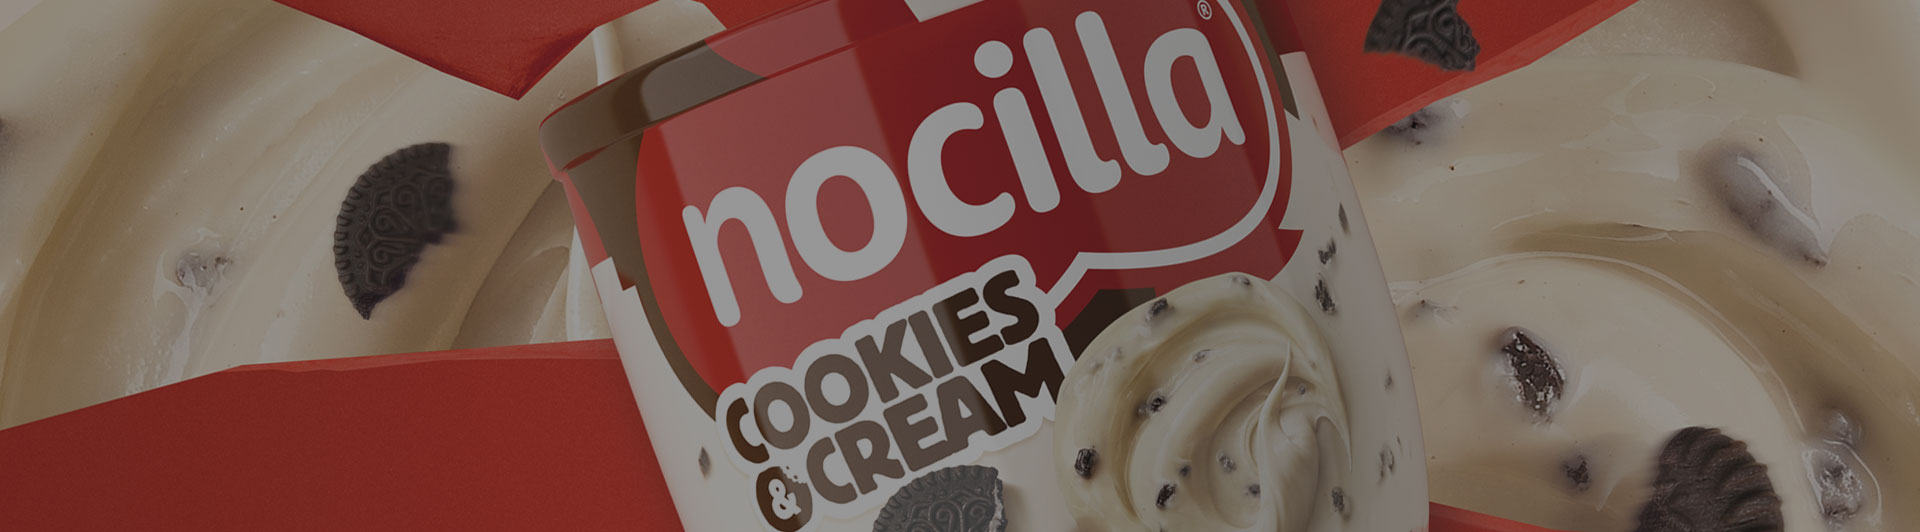 Nocilla cookies & Cream